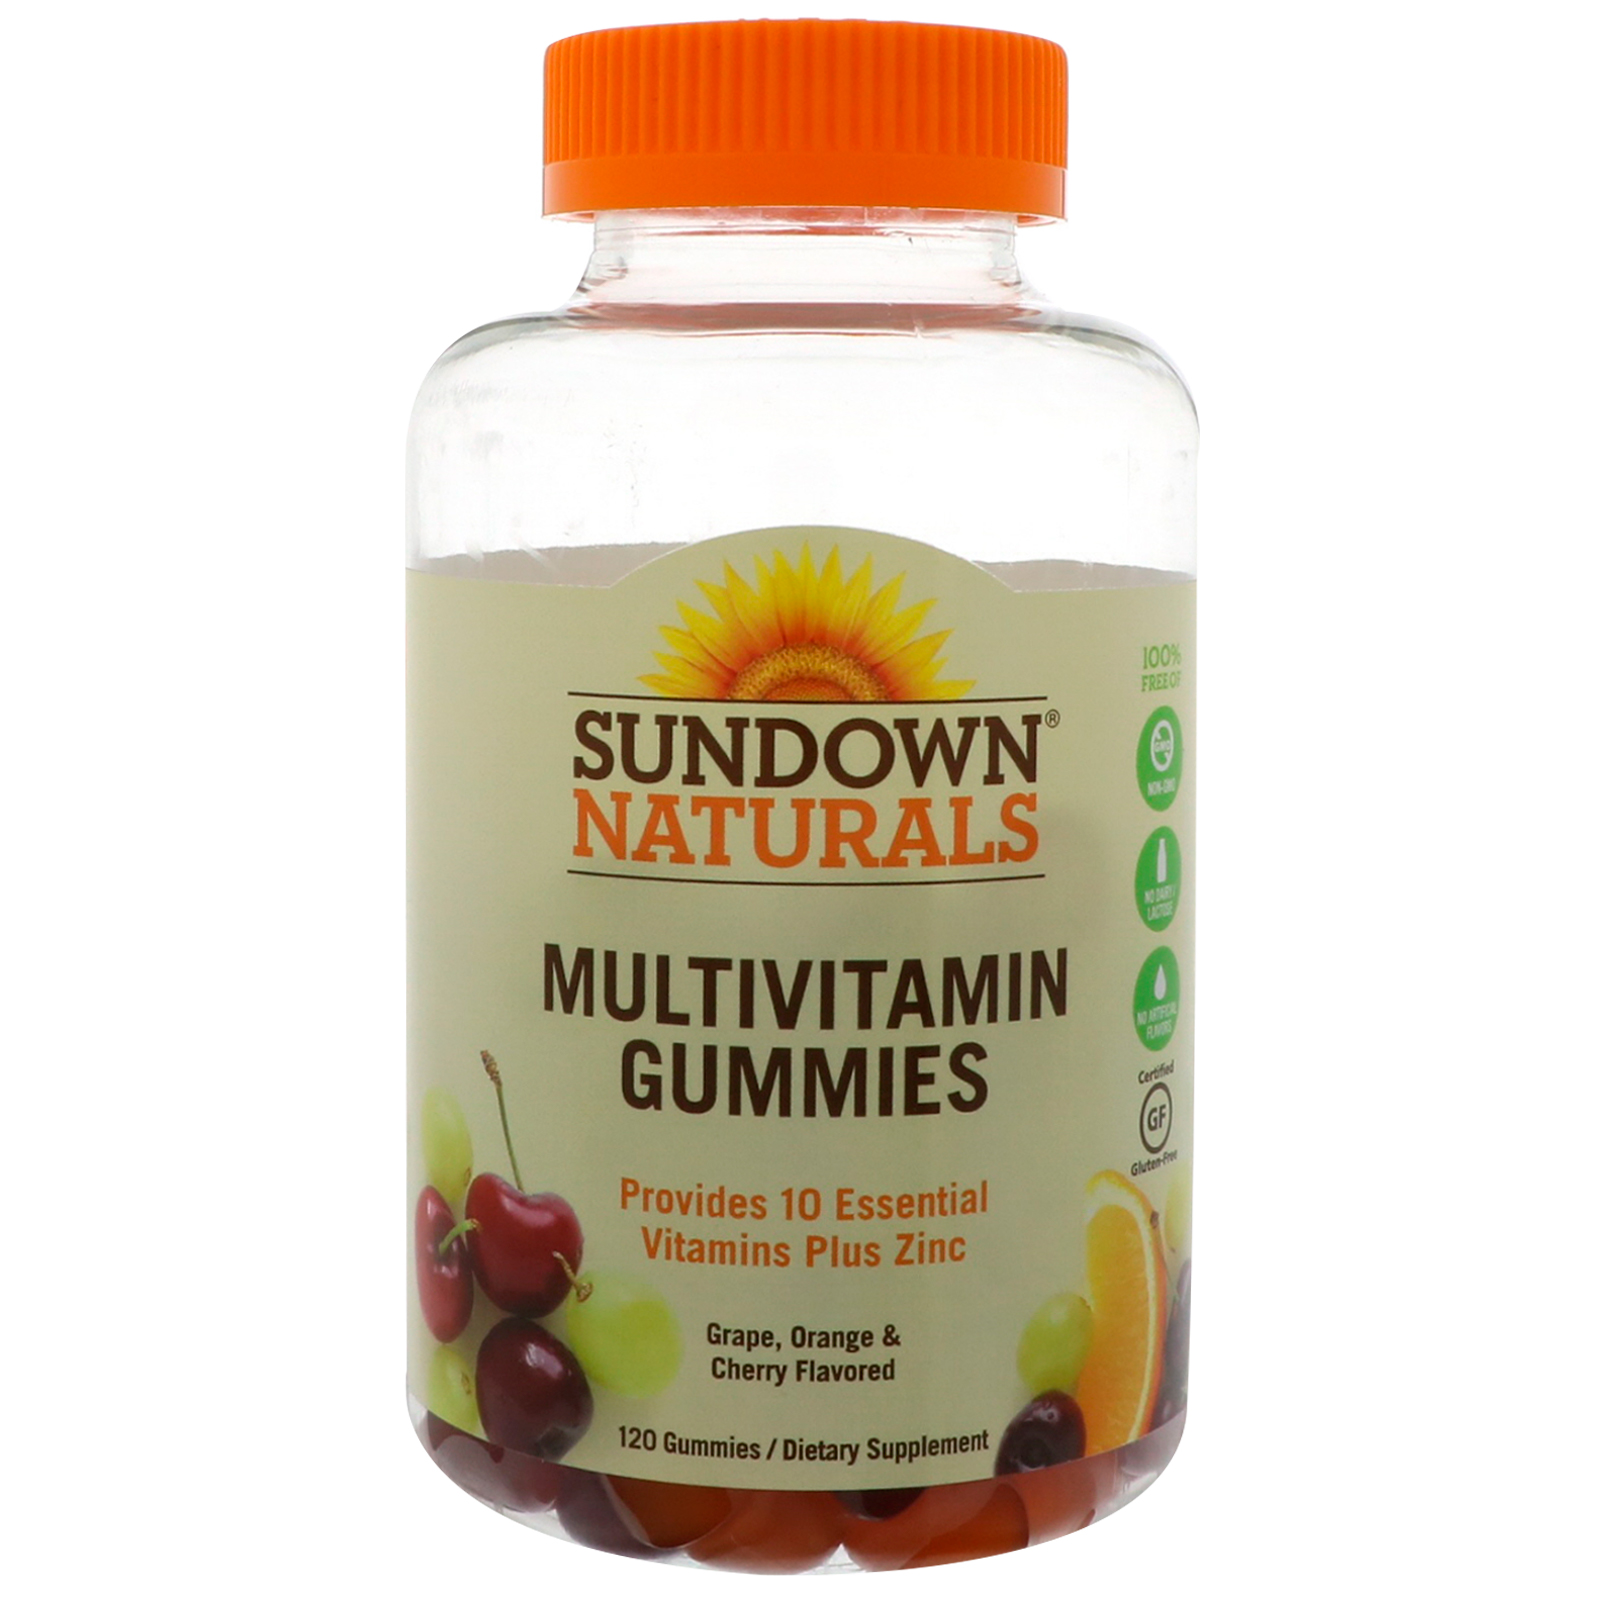 sundown naturals, multivitamin gummies, grape, orange & cherry